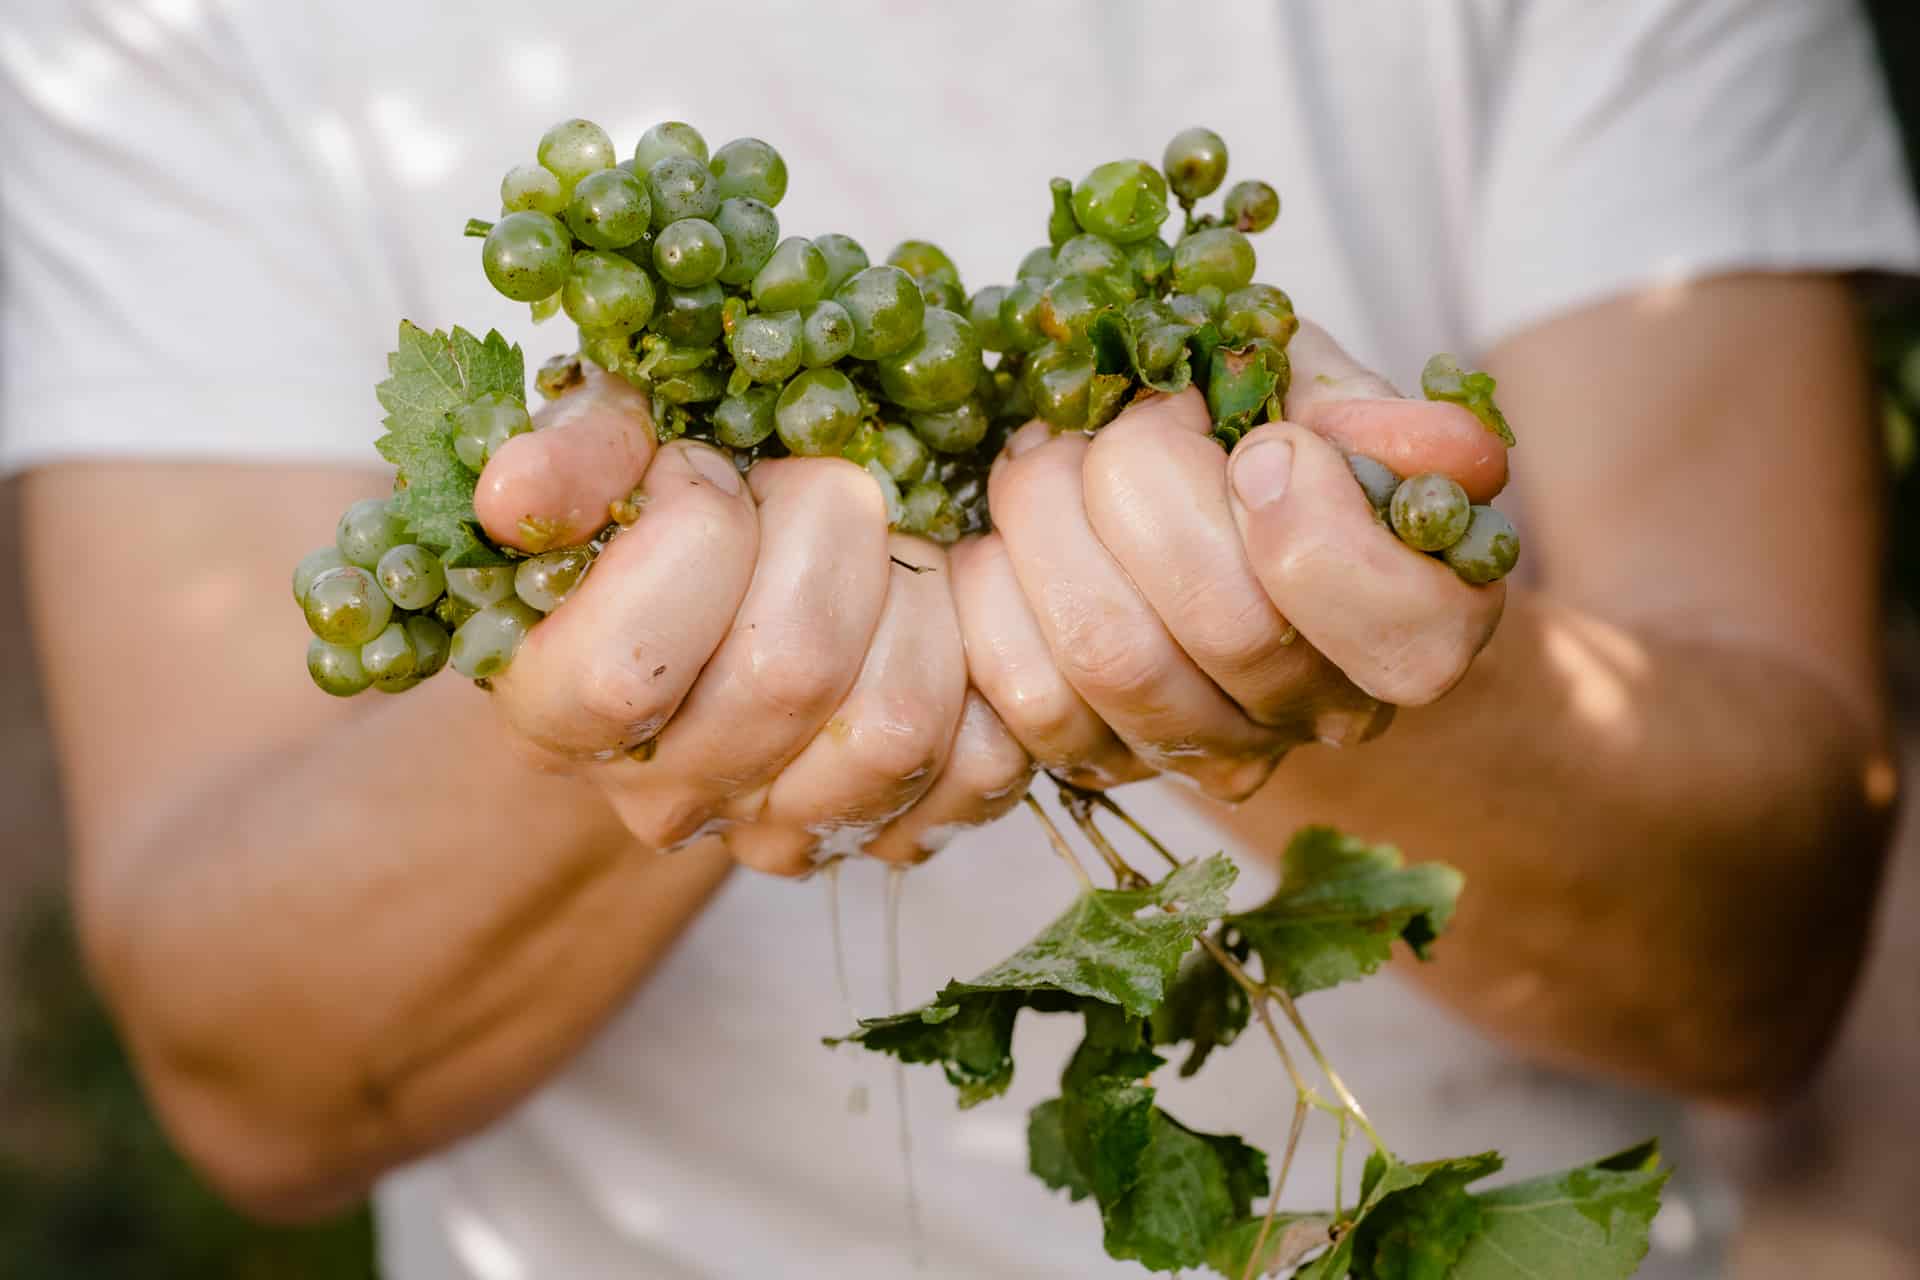 Grapes in the hands of Stefan Pratsch